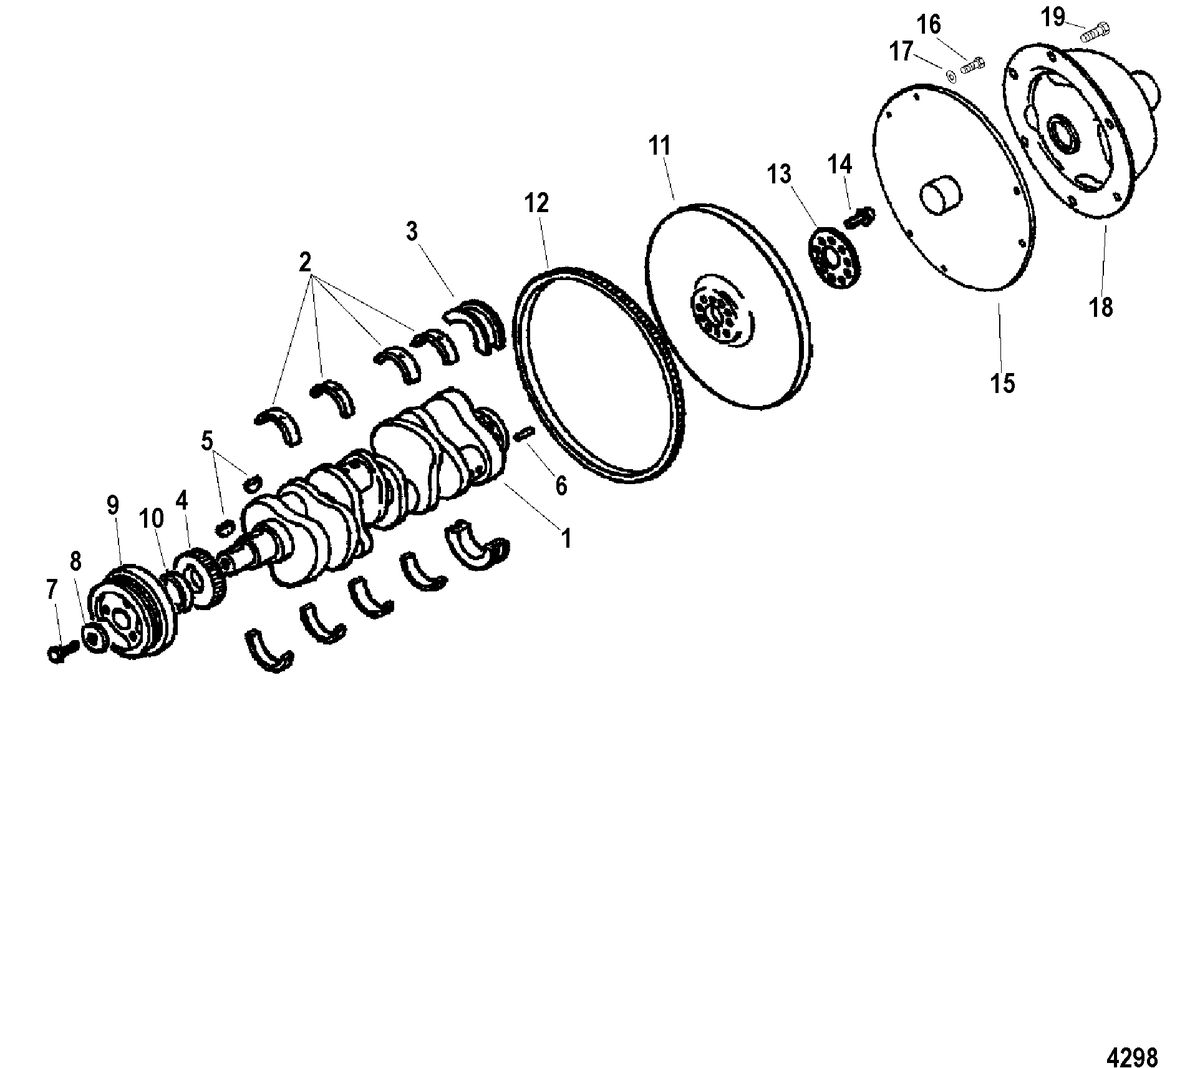 MERCRUISER CUMMINS/MERCRUISER DIESEL 7.3L D-TRONIC BRAVO Crankshaft, Flywheel, and Related Parts